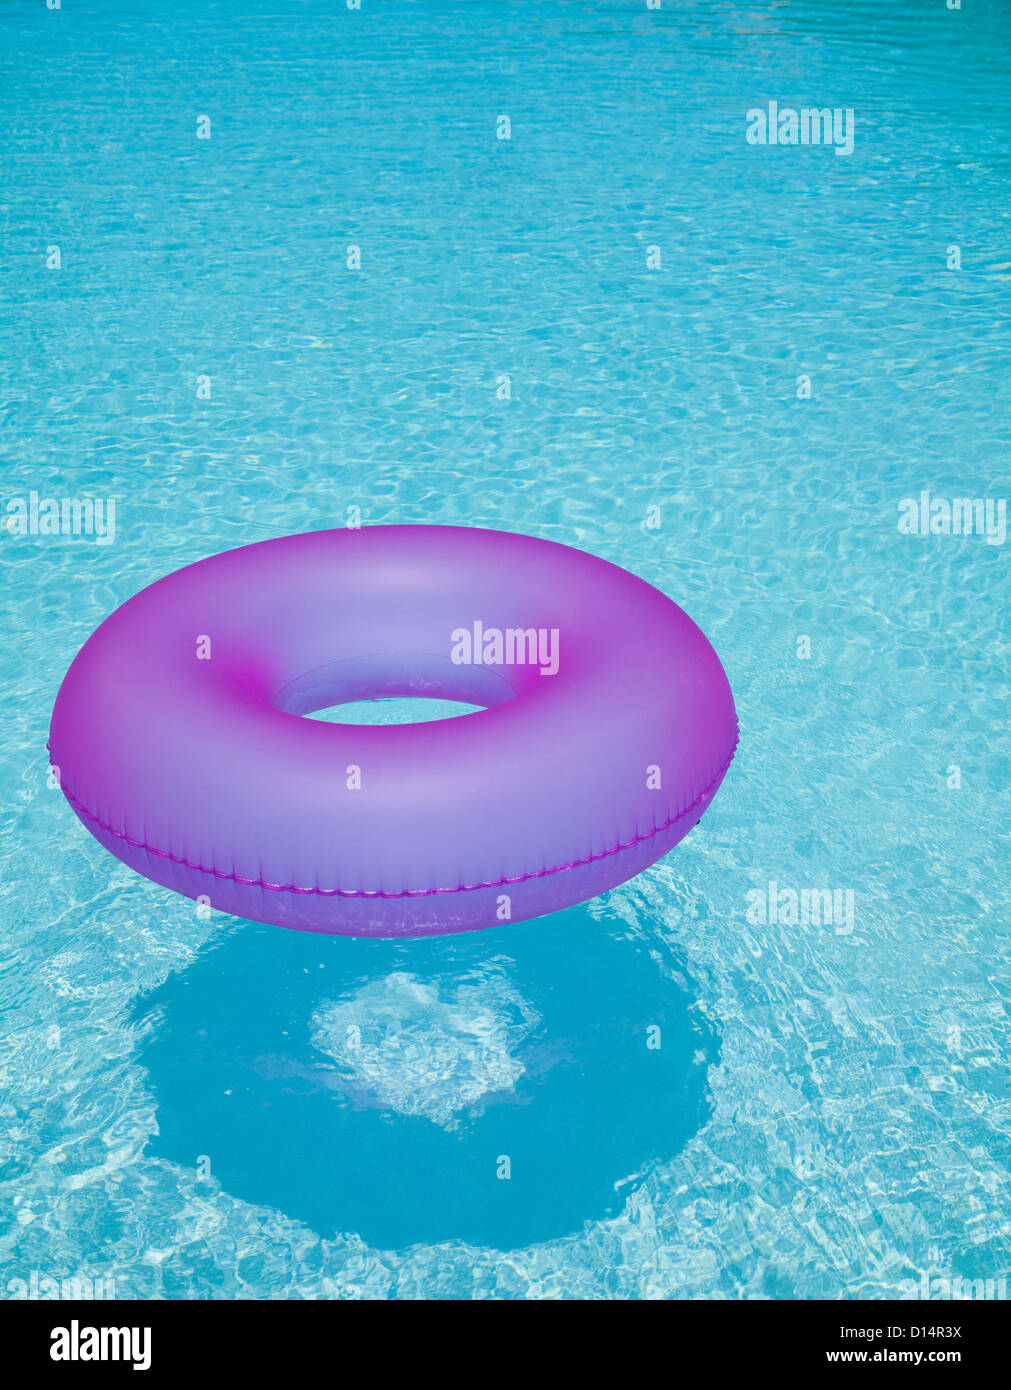 USA, Florida, St. Petersburg, Inner tube floating on water Stock Photo